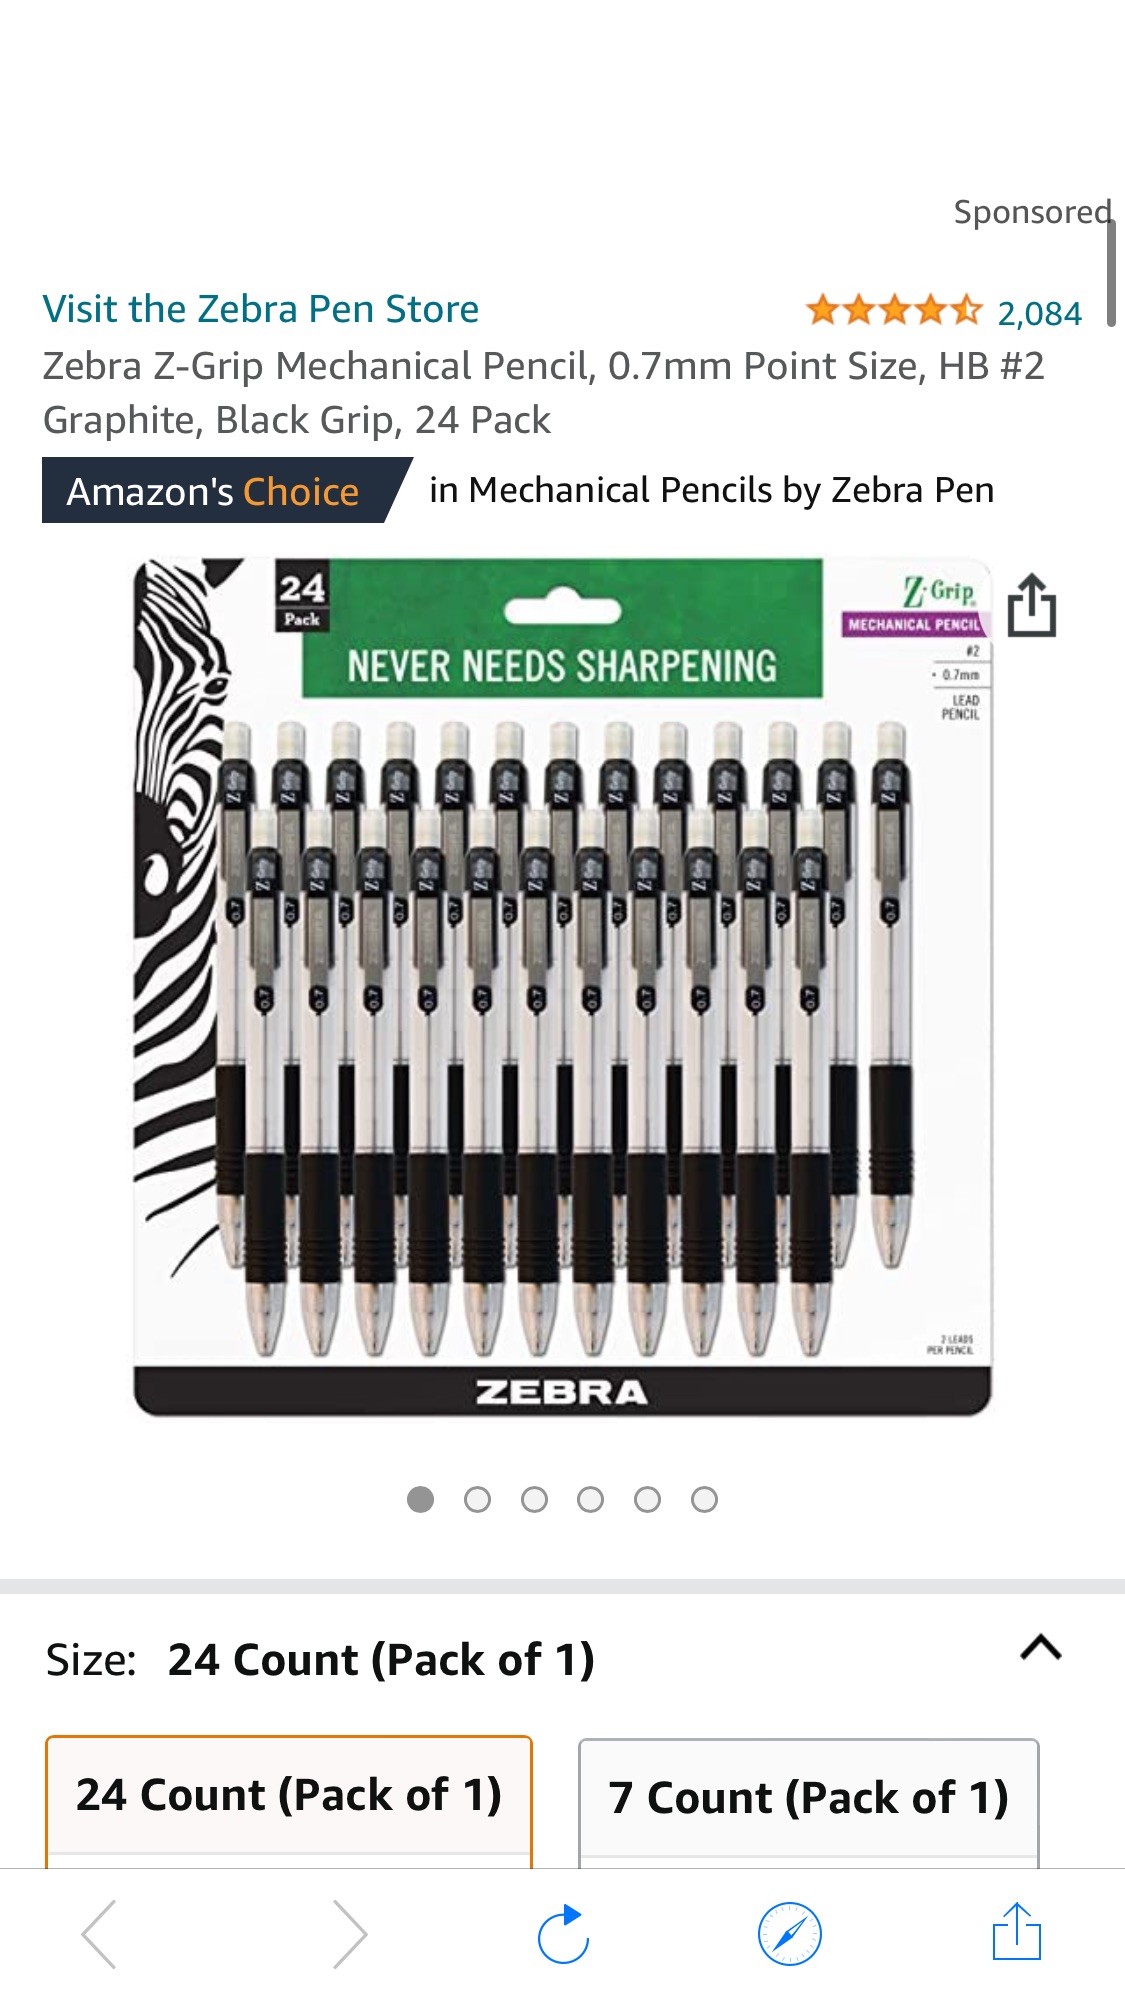 Amazon.com : Zebra Z-Grip Mechanical Pencil, 0.7mm Point Size, HB #2 Graphite, Black Grip, 24 Pack 笔